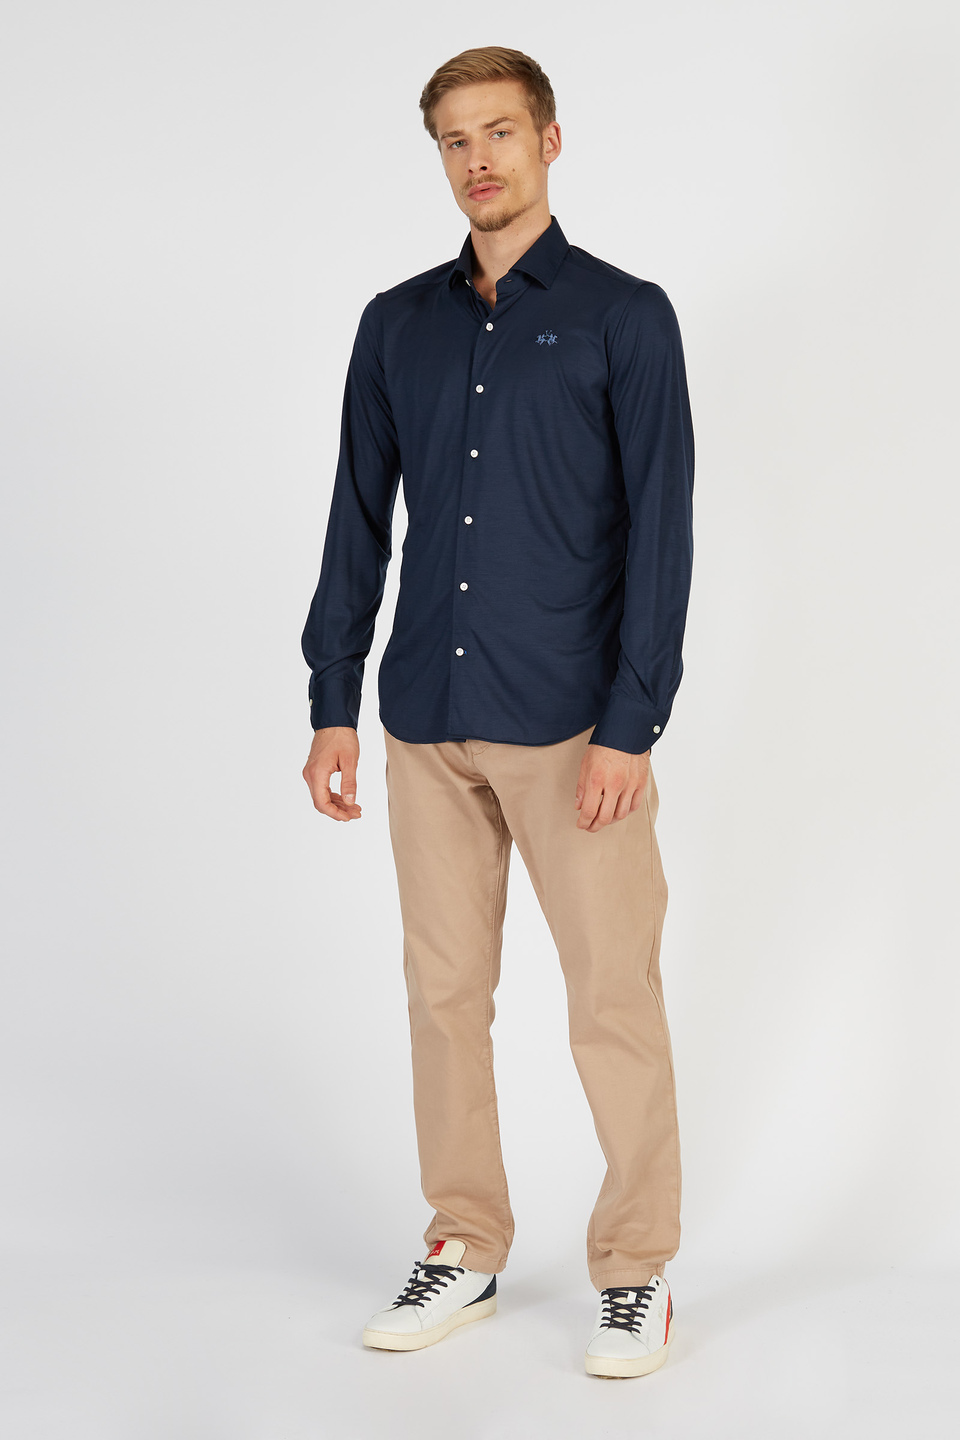 Men’s Blue Ribbon regular fit long sleeve virgin wool shirt | La Martina - Official Online Shop